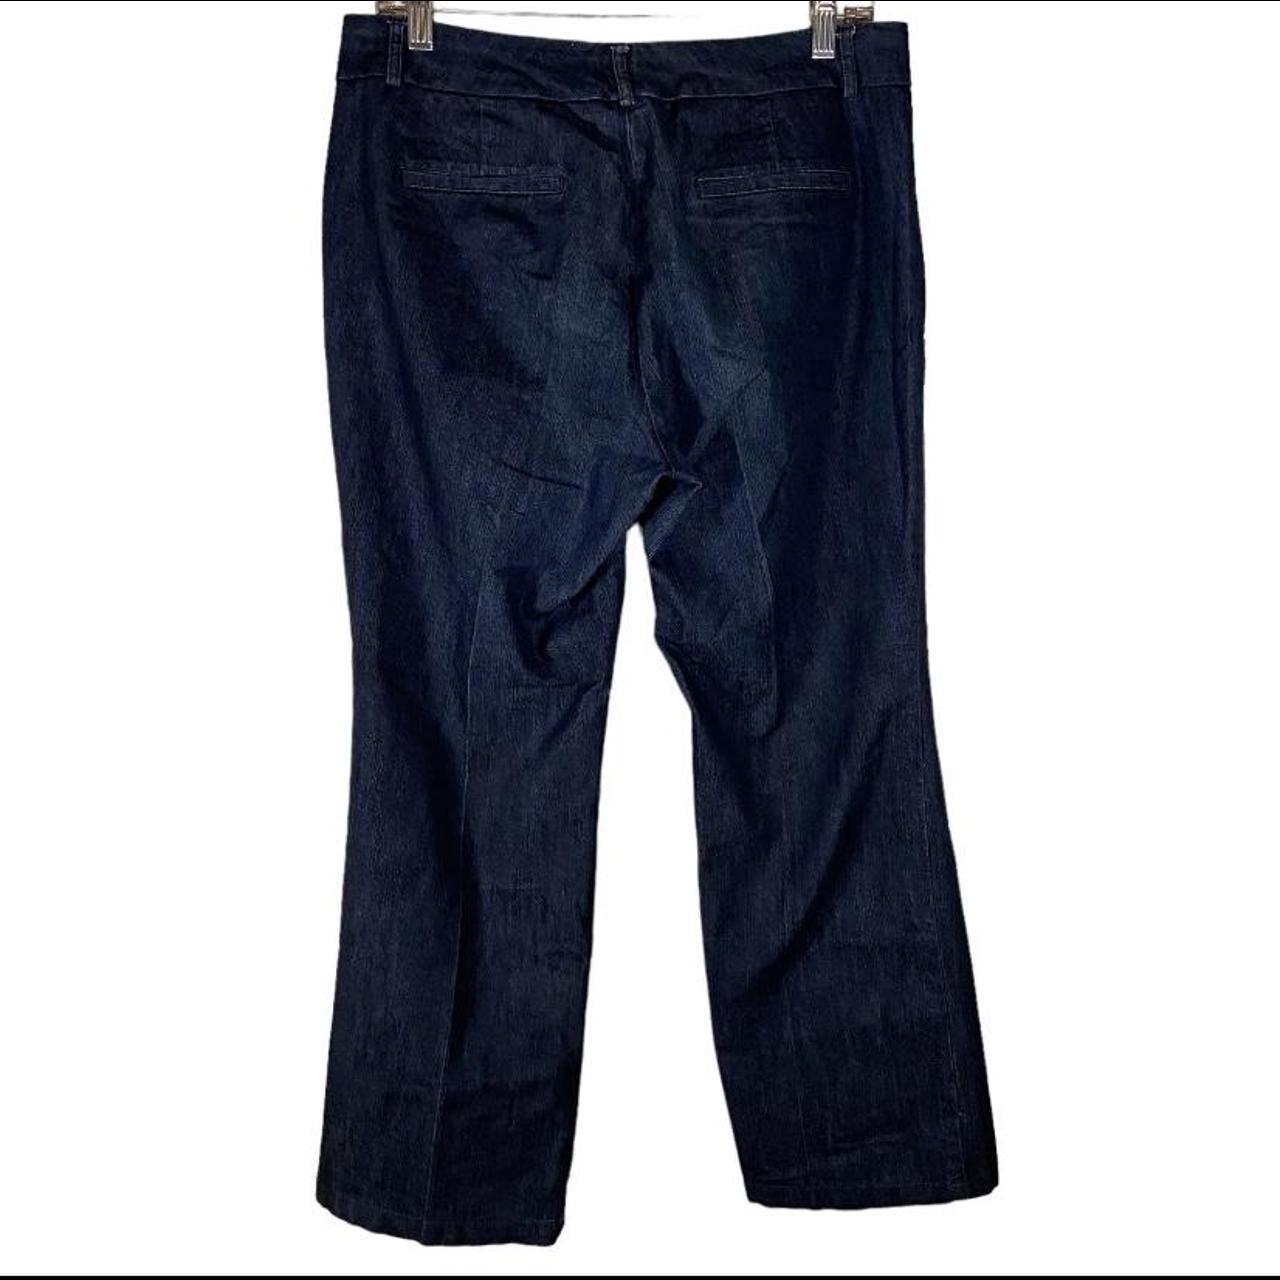 Dockers Ideal Fit Metro Blue Jeans Trouser Pants... - Depop